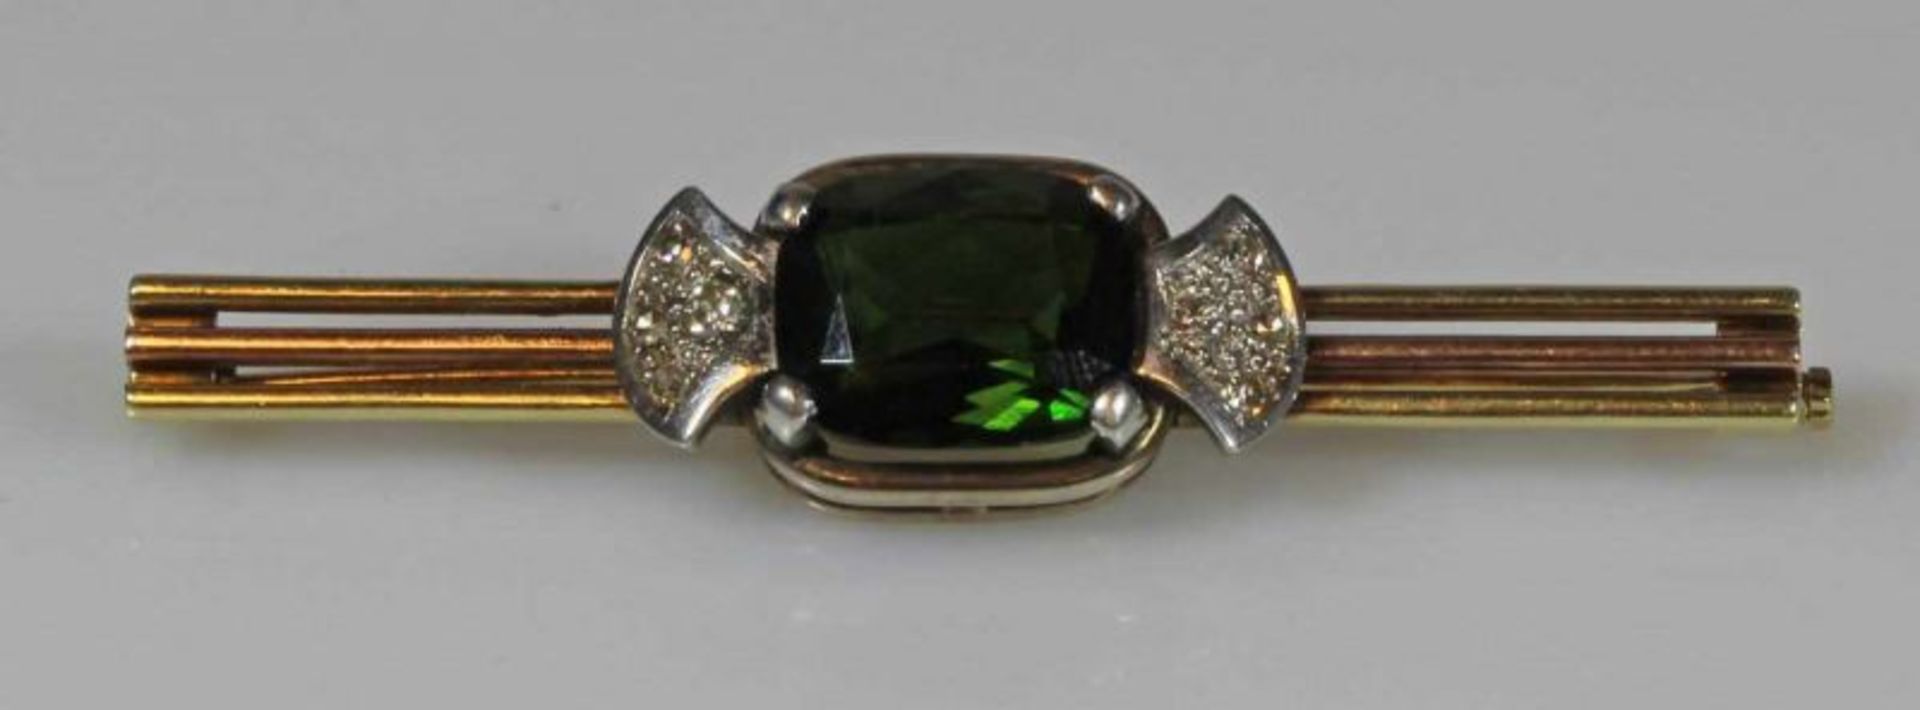 Nadel, Art Deco, um 1930, WG/RG/GG 585, 1 facettierter grüner Turmalin, kleiner Diamantbesatz, 10